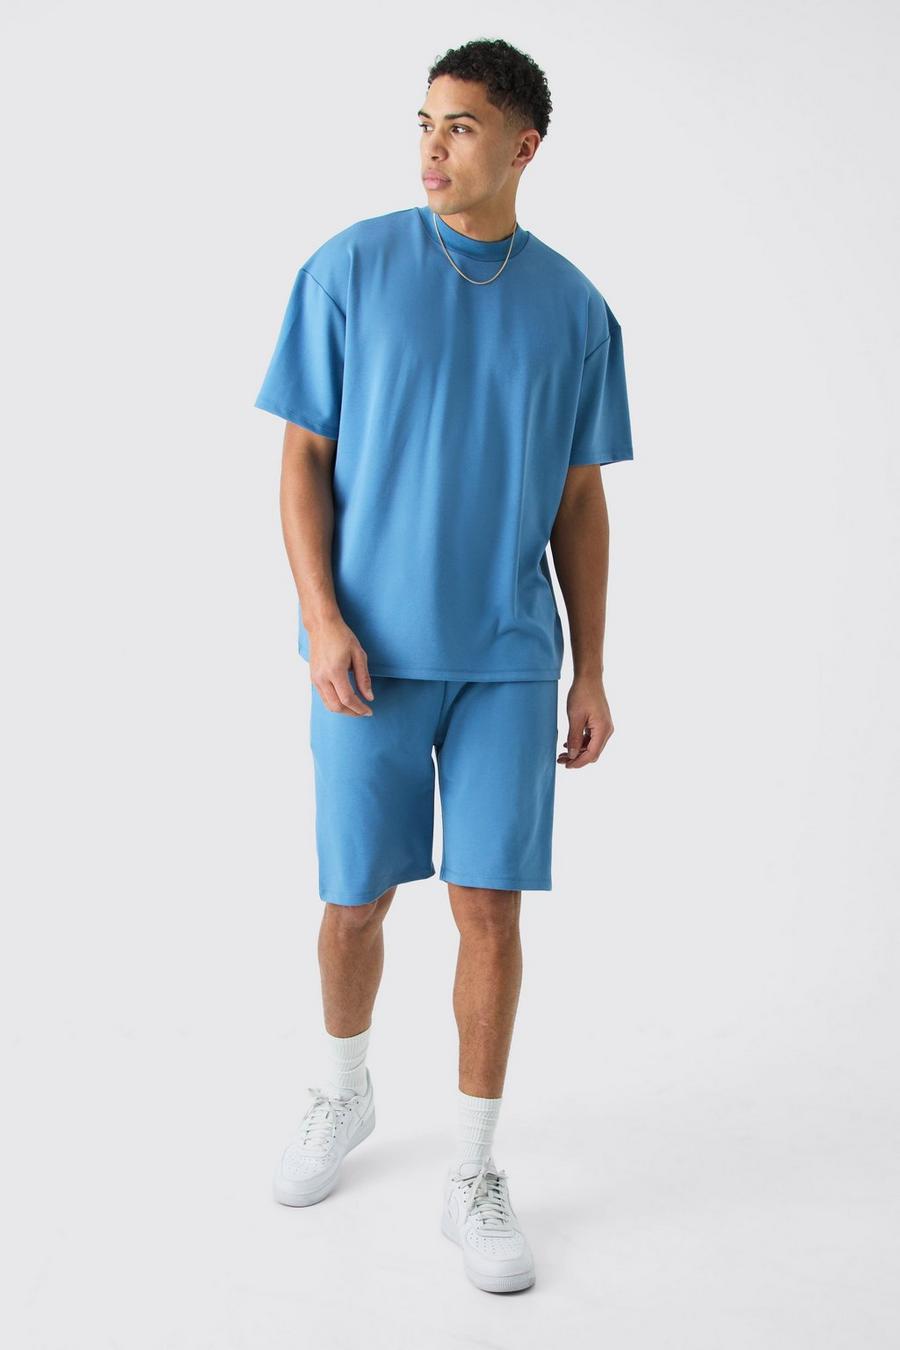 Slate blue Premium Oversize t-shirt och shorts i supertjockt tyg